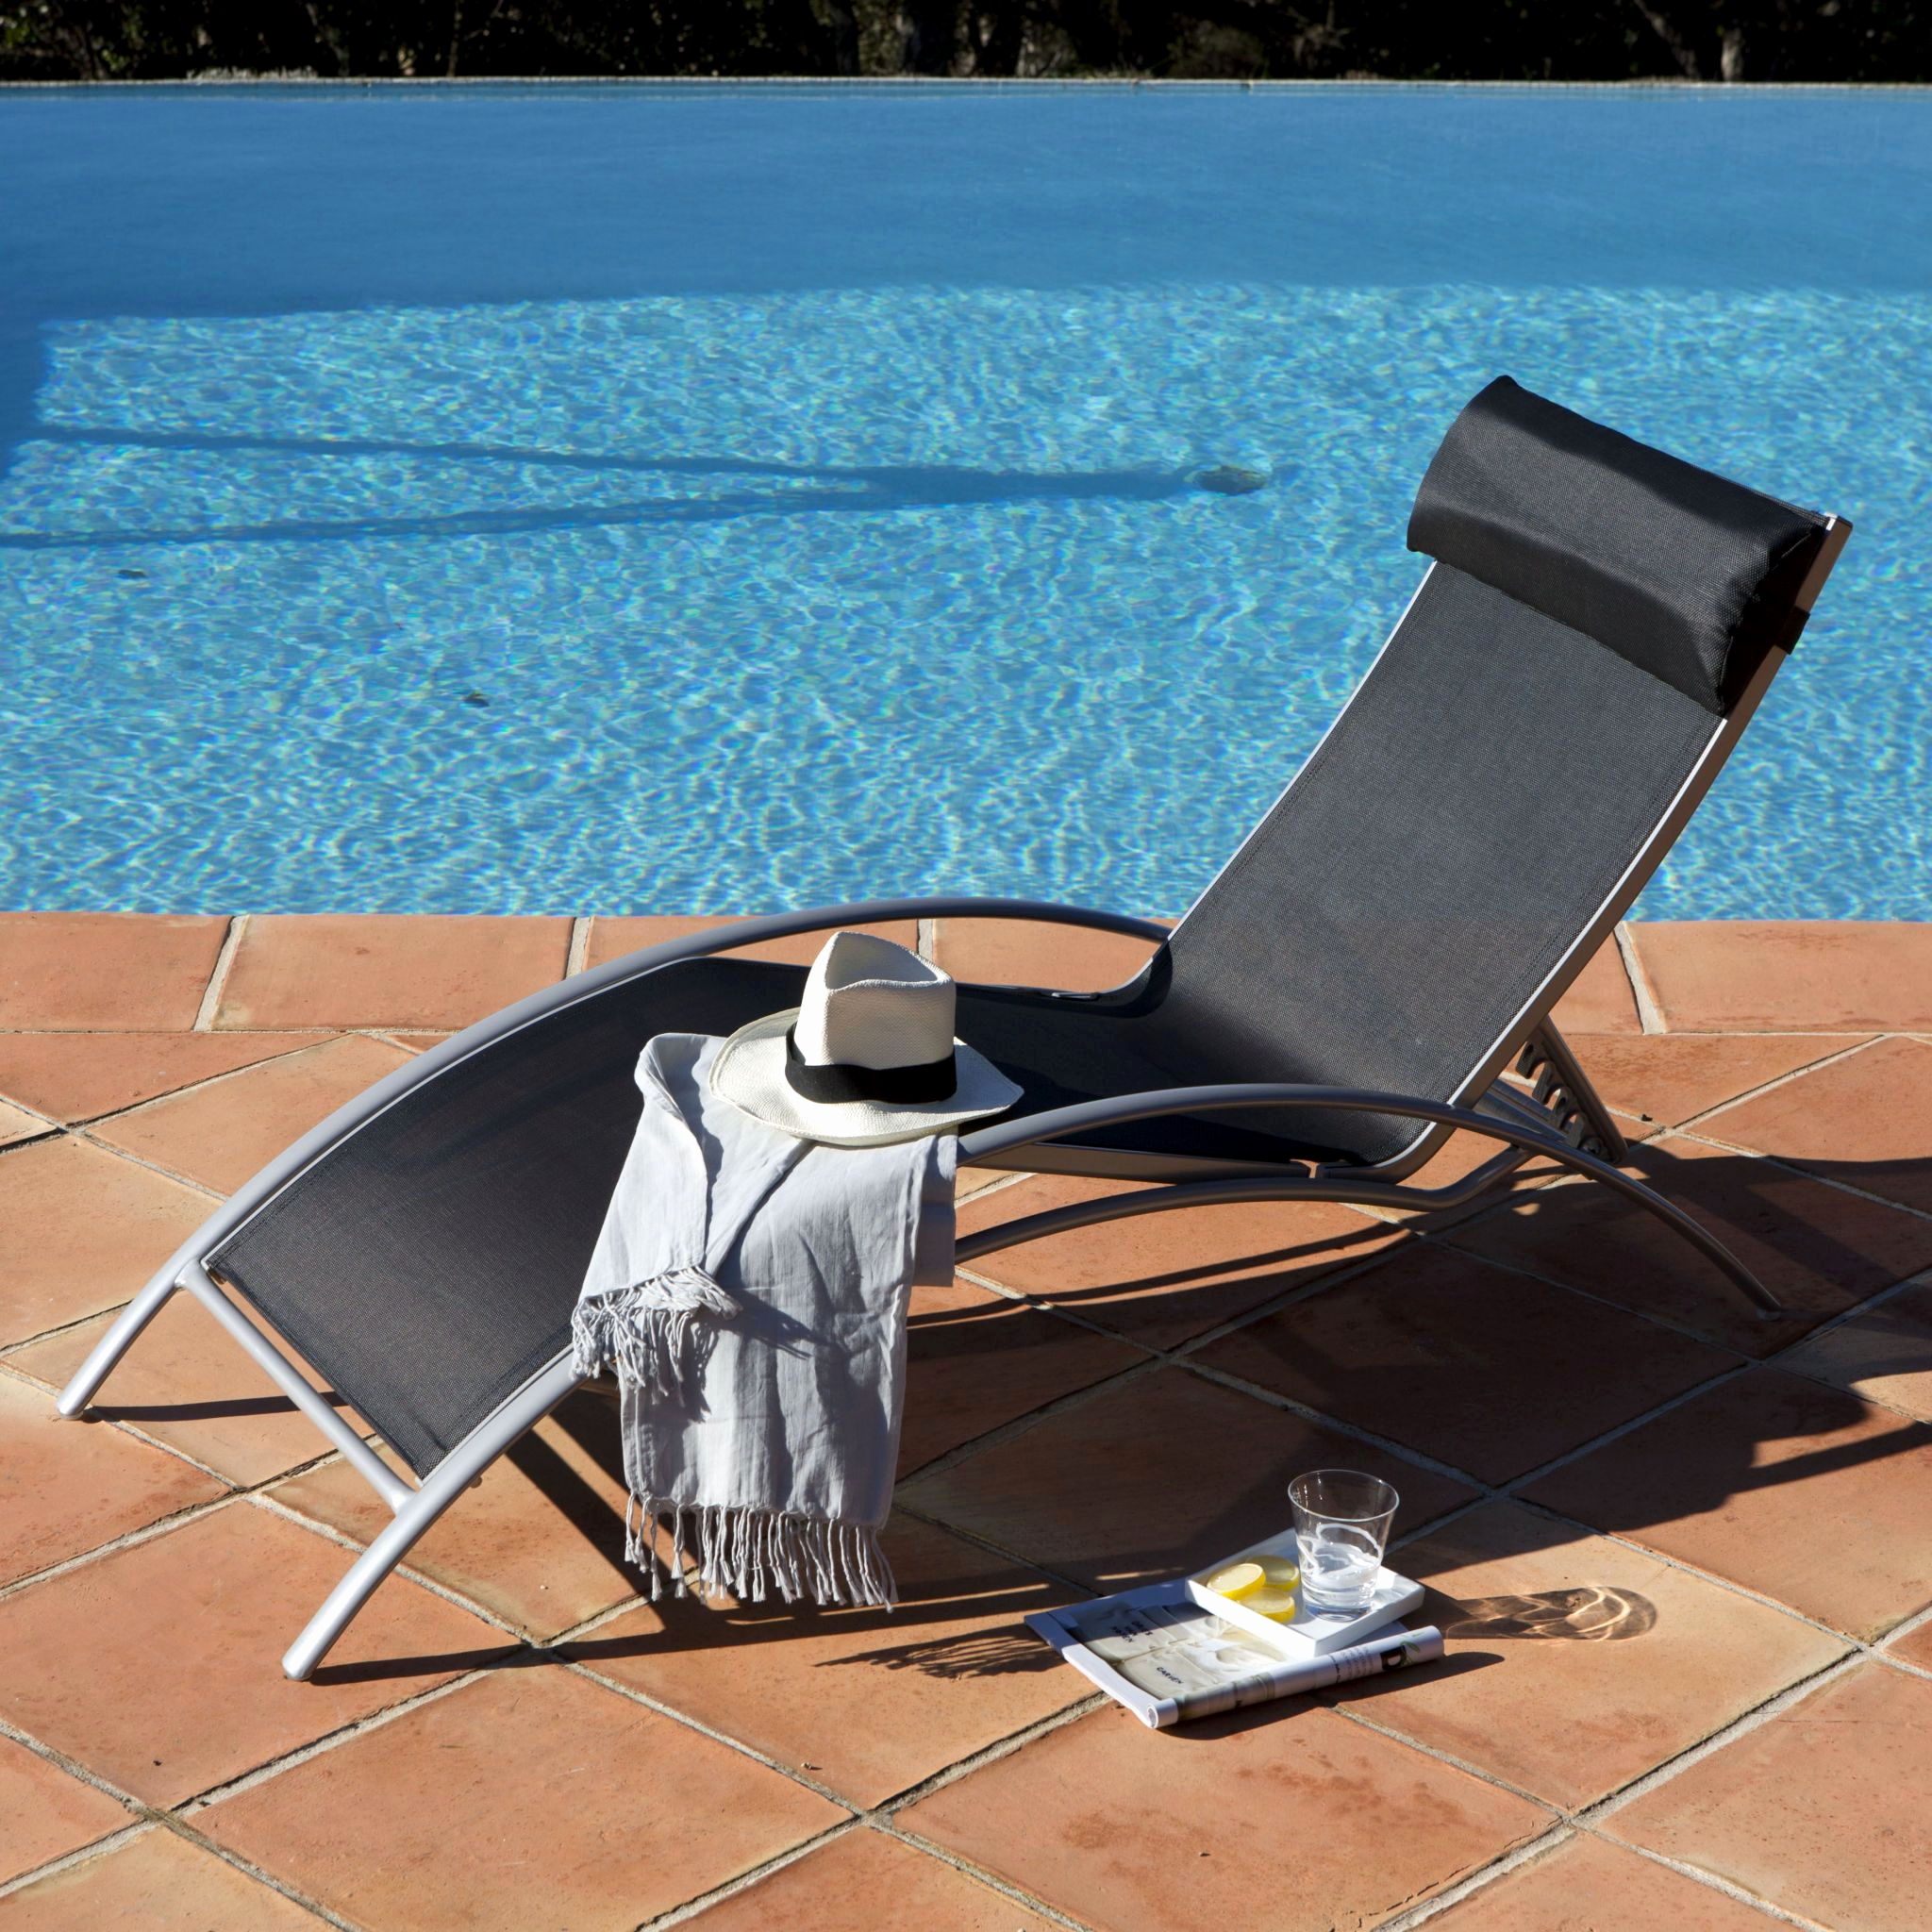 bain de soleil castorama unique bain de soleil aluminium unique chaise longue castorama best chaise of bain de soleil castorama